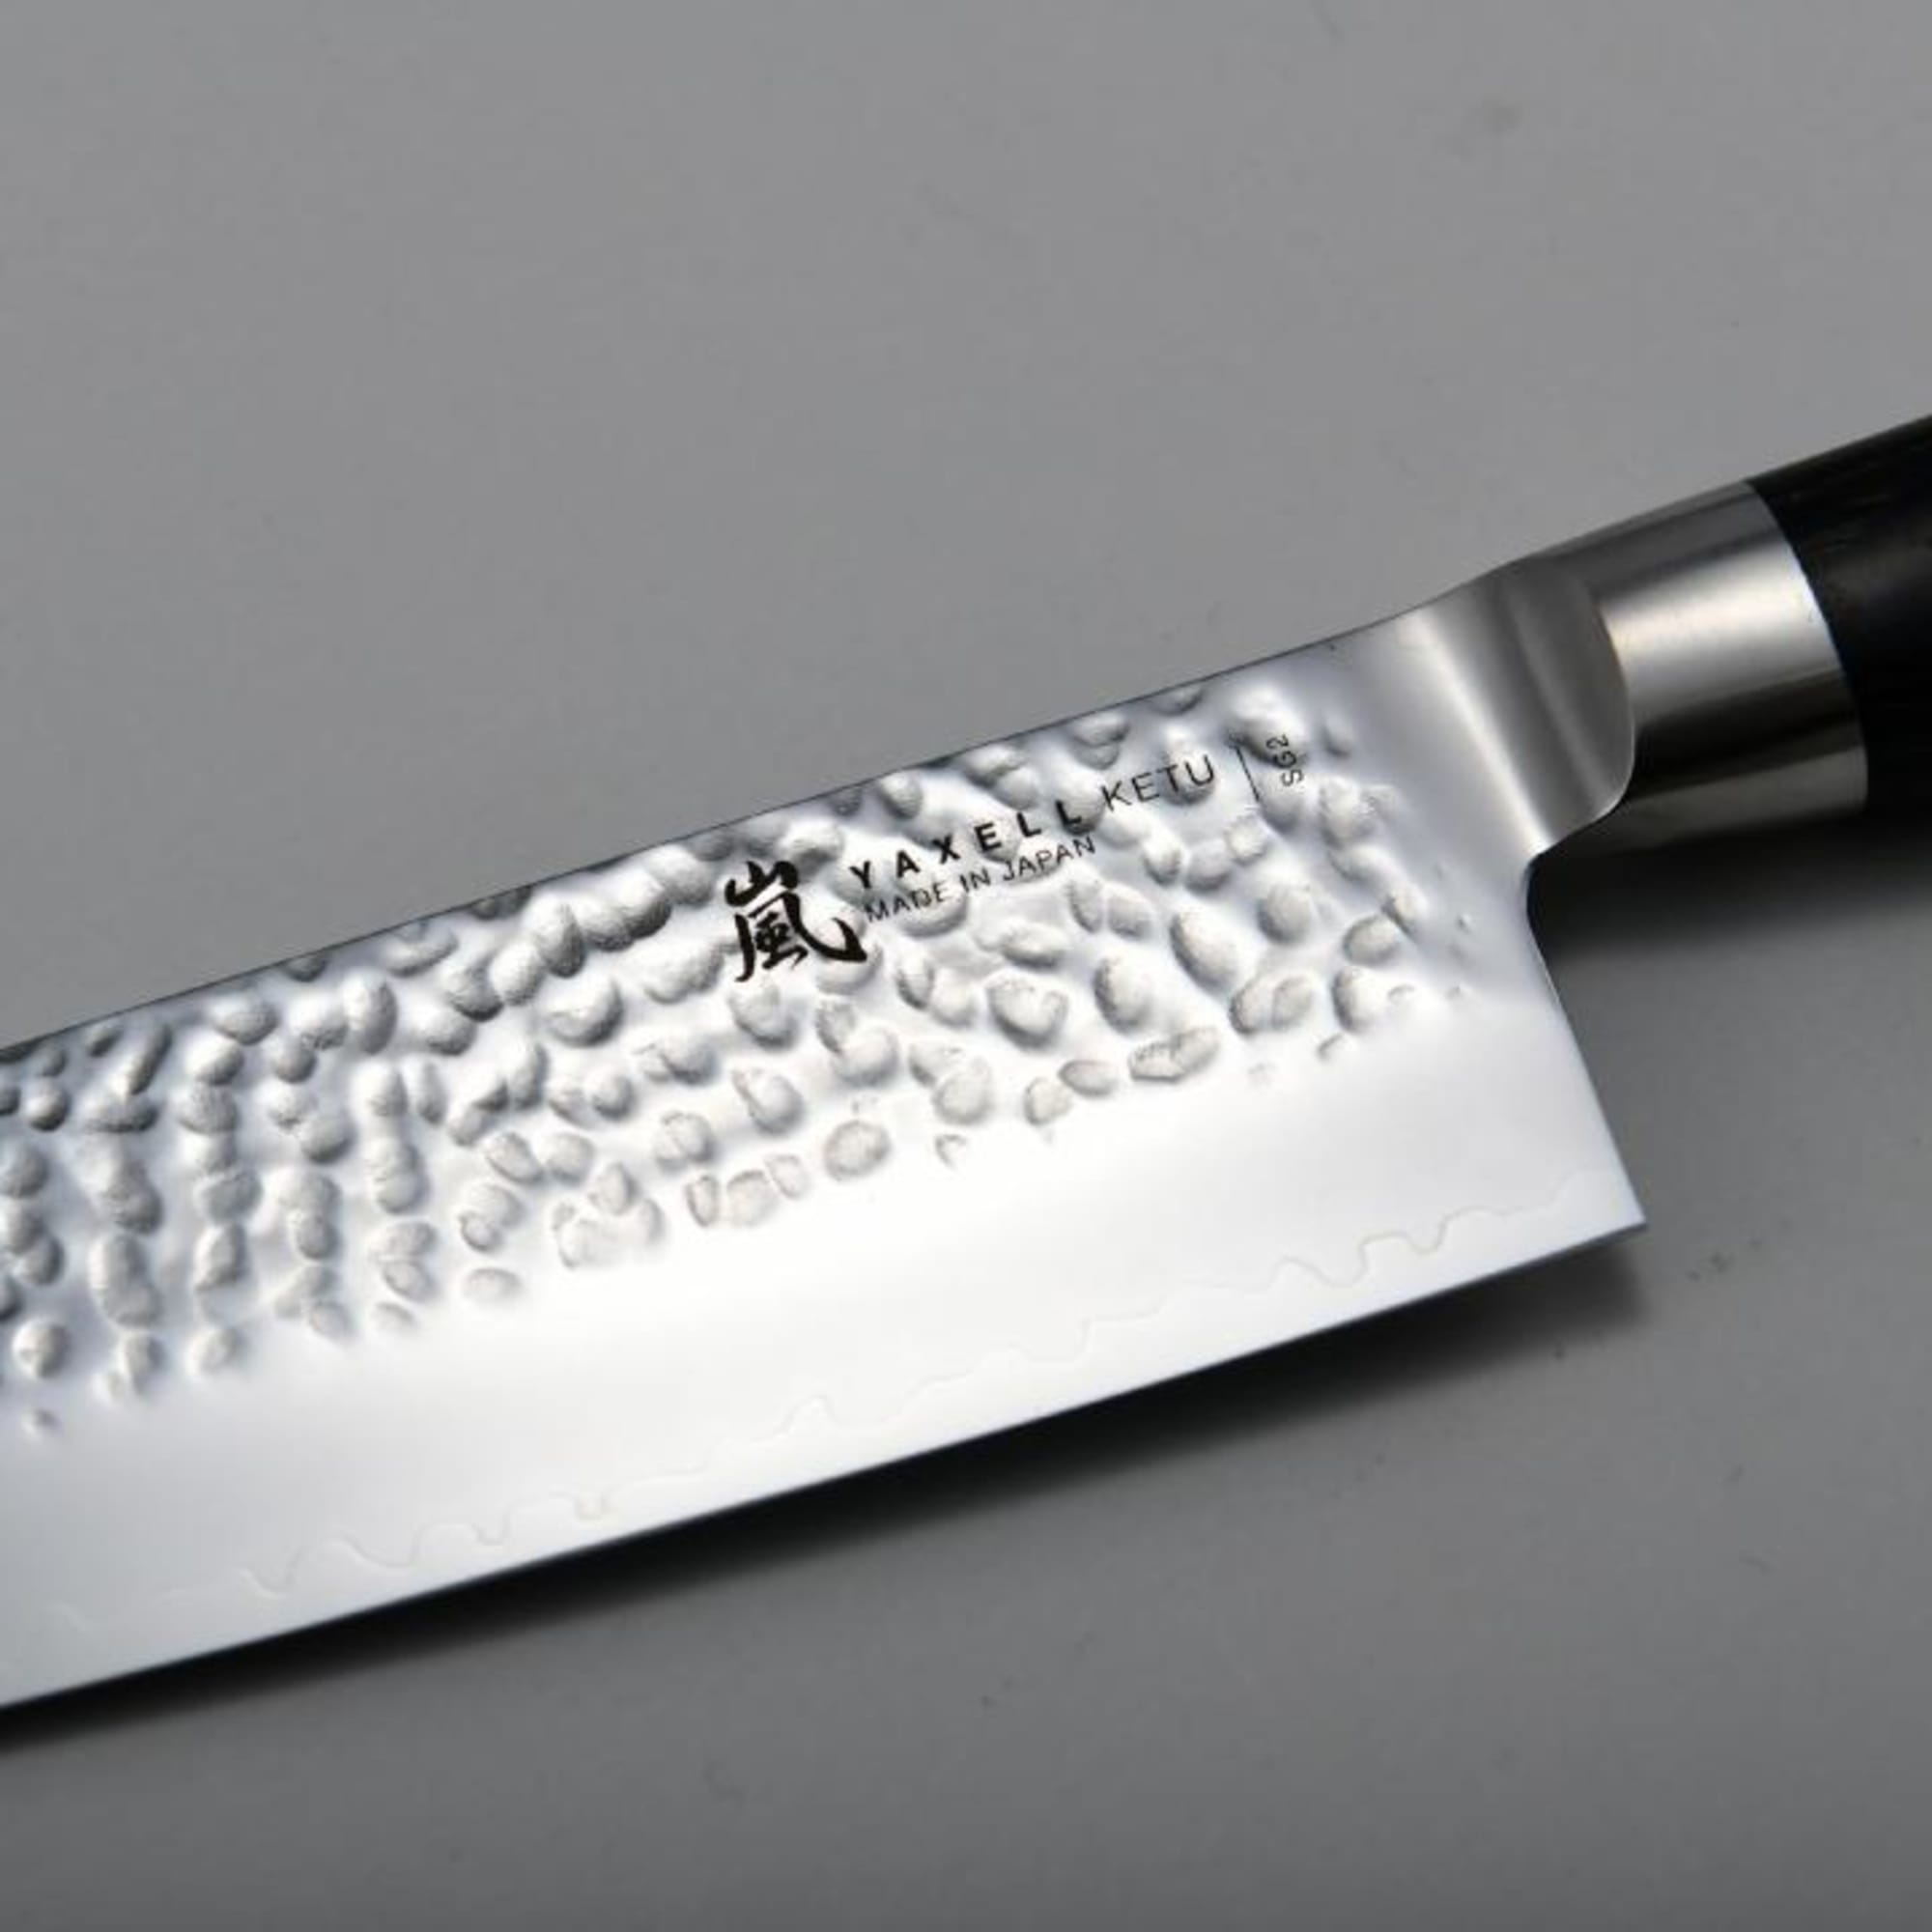 Yaxell Ketu Santoku Knife 16.5cm Image 2